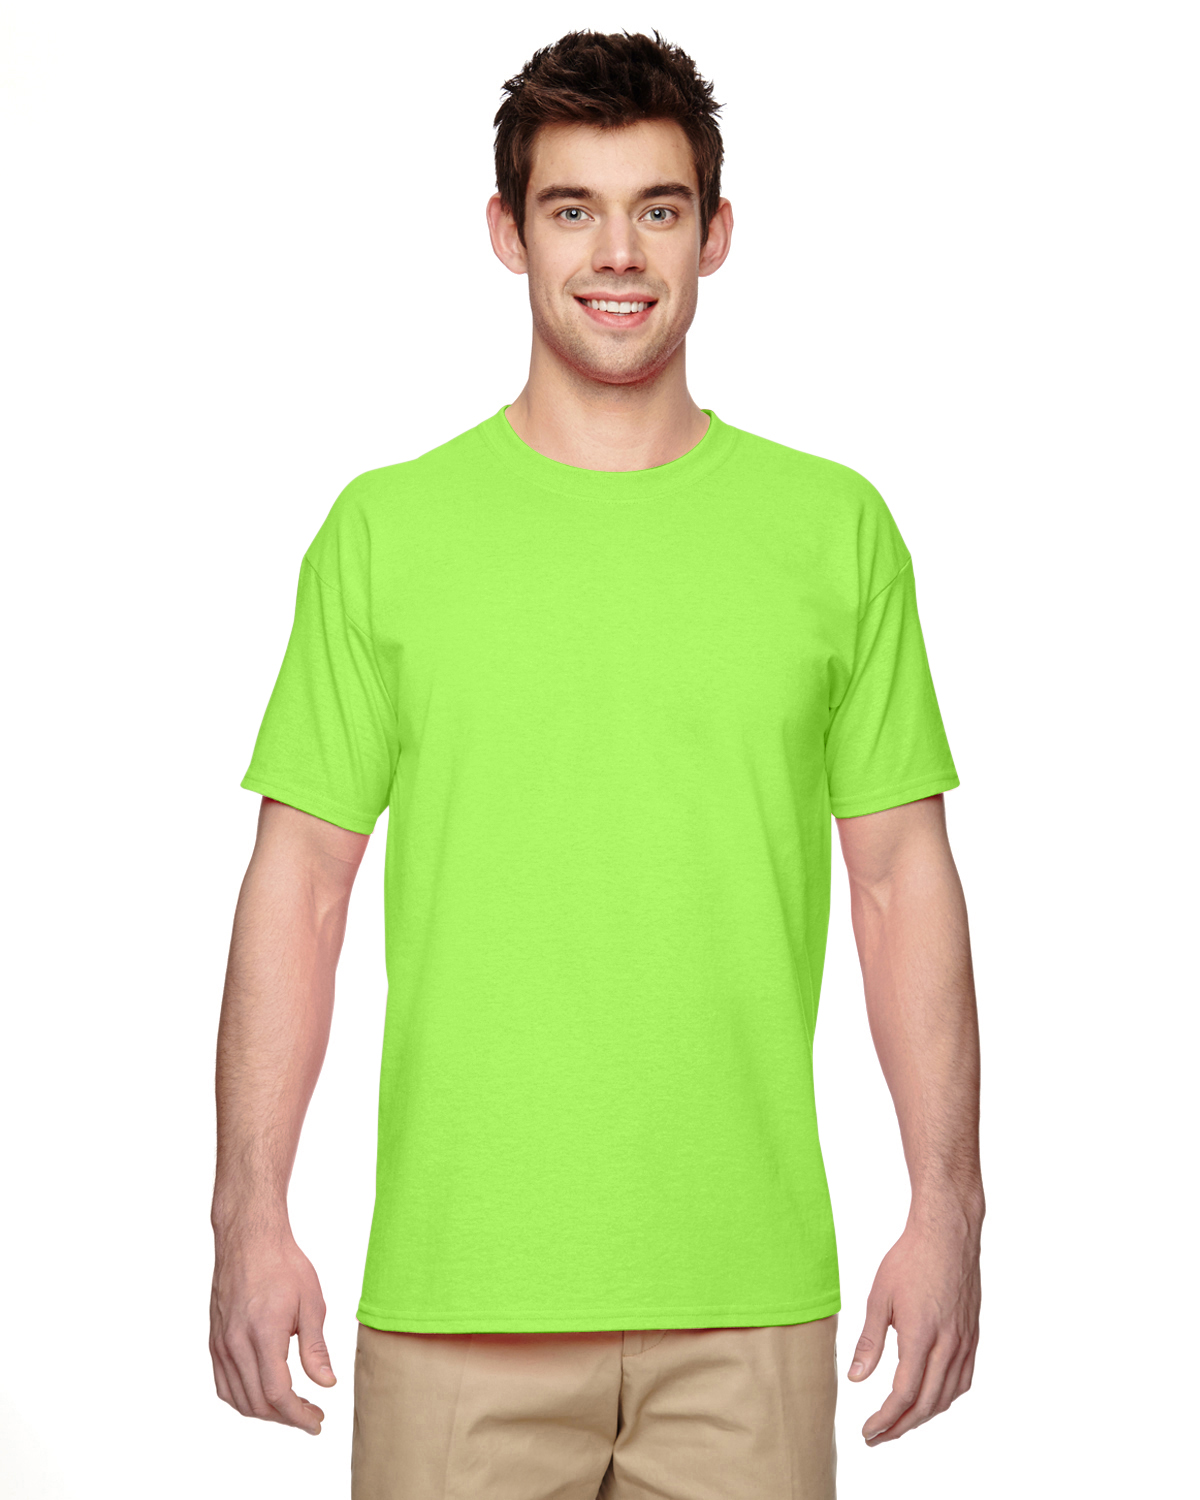 neon t shirts cheap